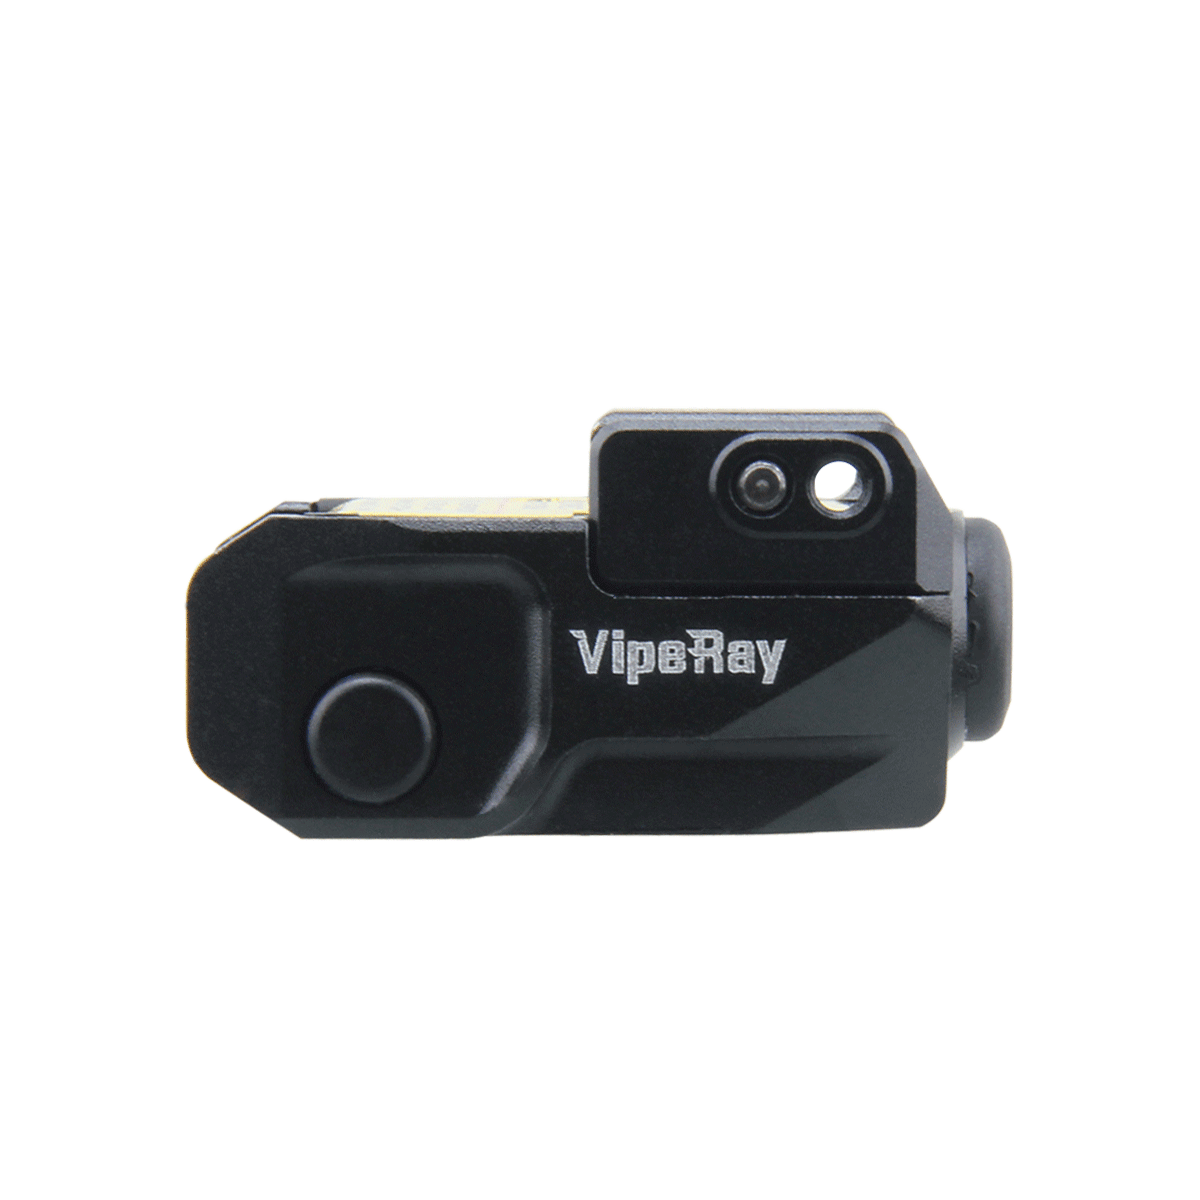 VipeRay Scrapper Subcompact Pistol Green Laser Sight